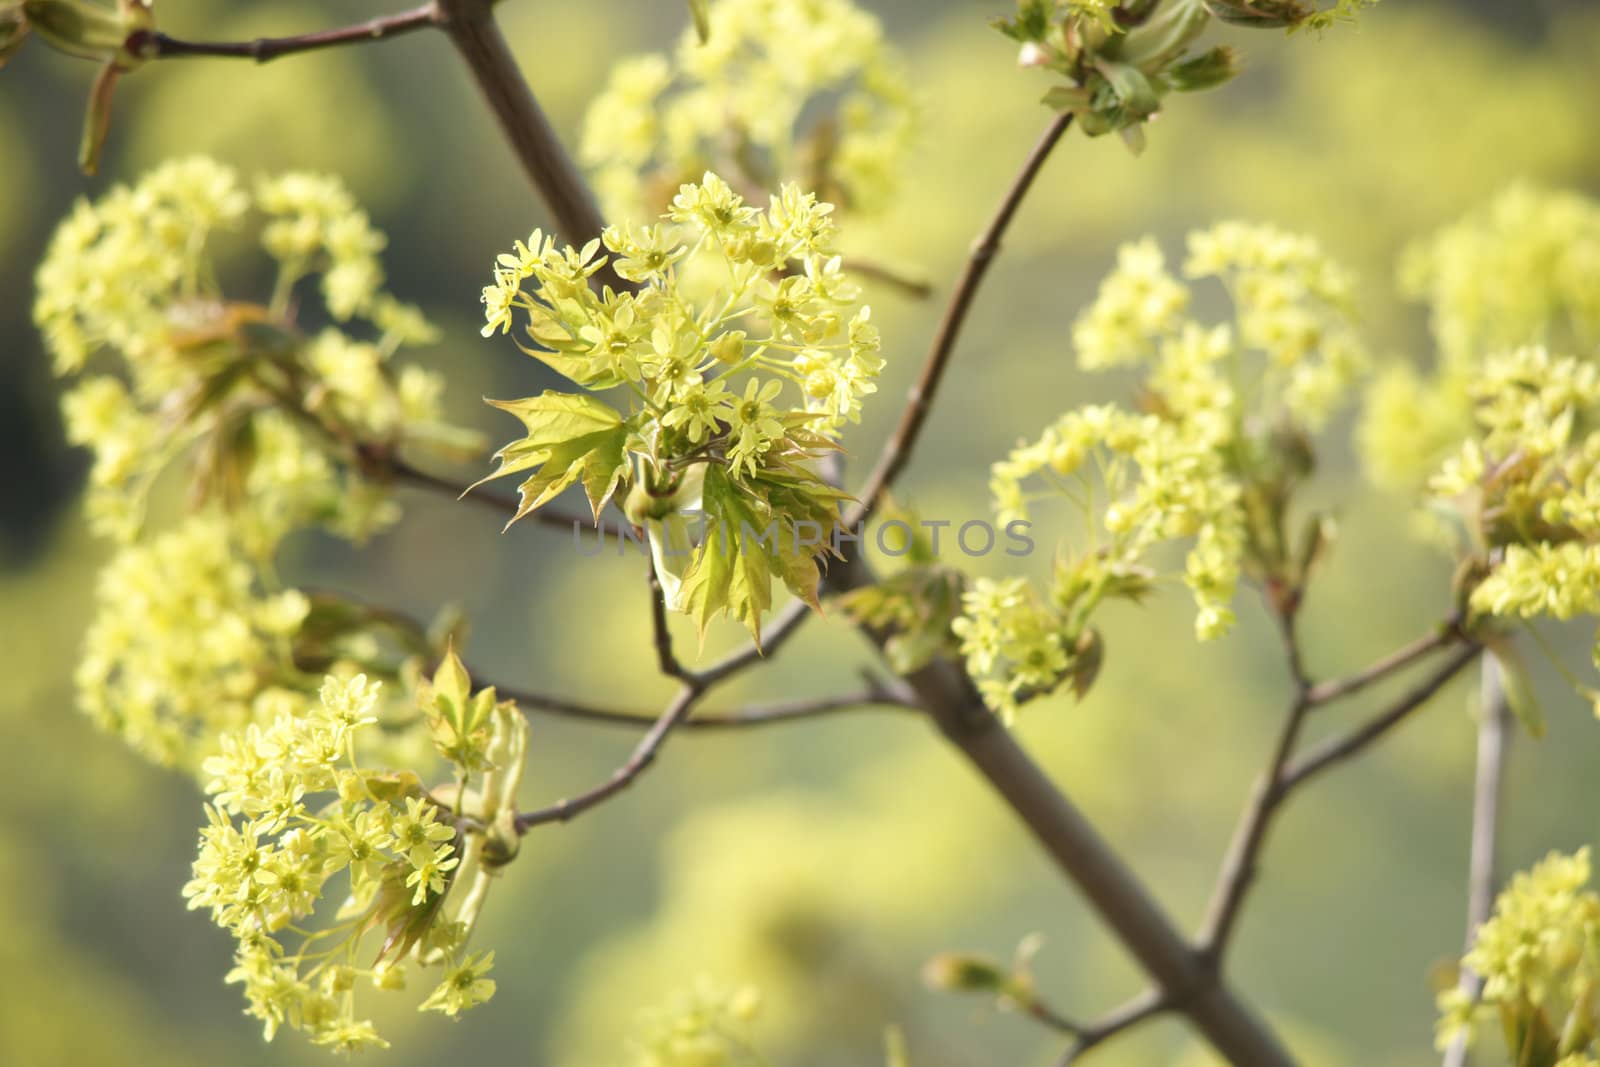 Flowers of maple tree upwards